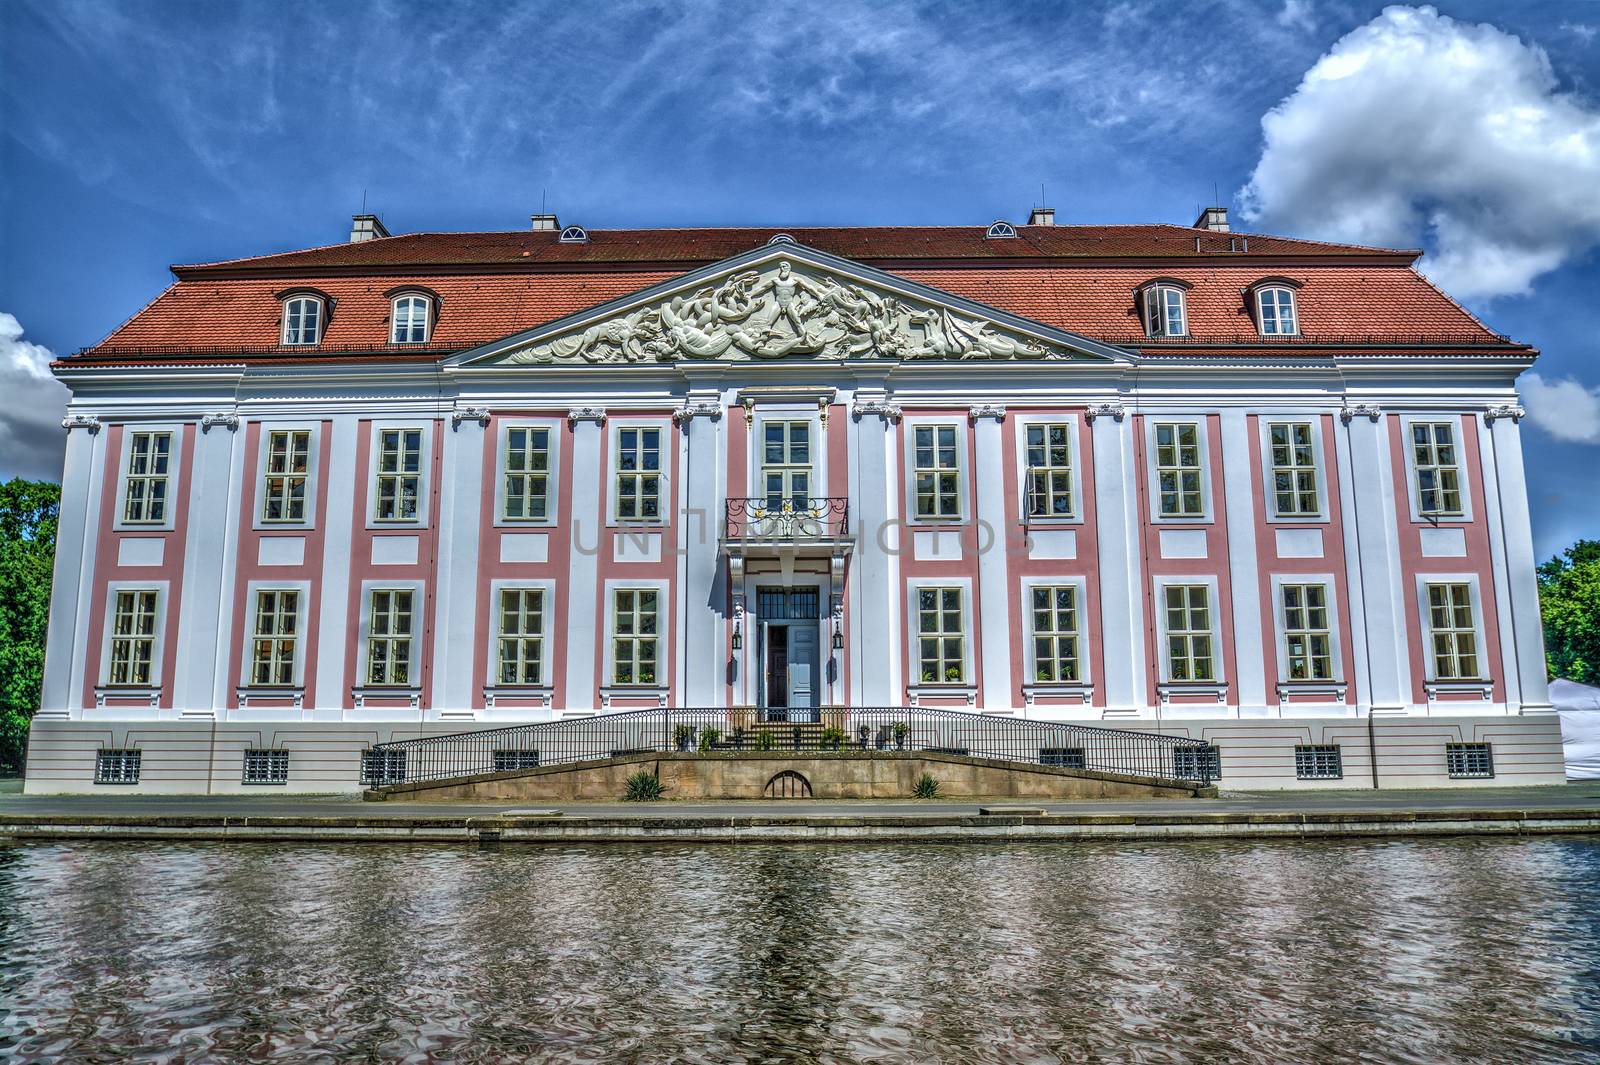 Baroque styled Friedrichsfelde Palace in Berlin, Germany. Hdr image.